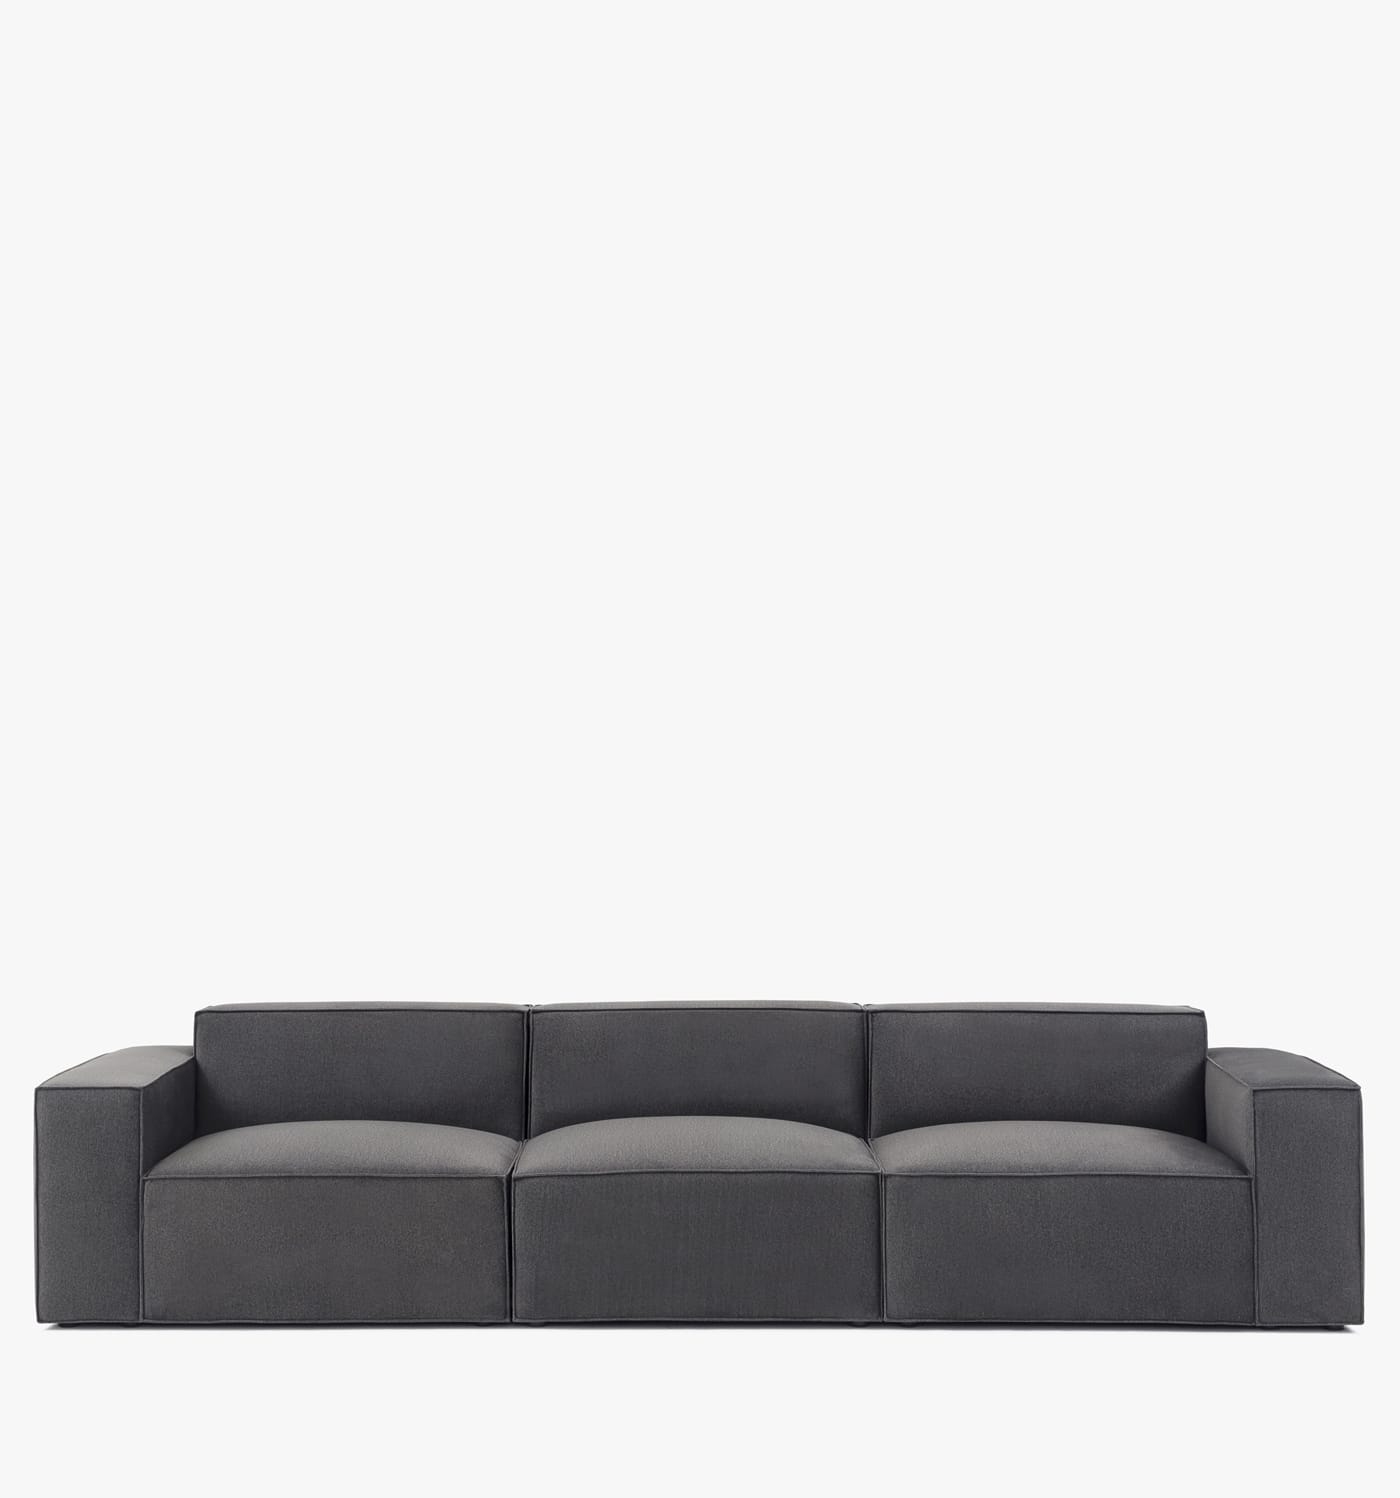 Pacific modular sofa - charcoal